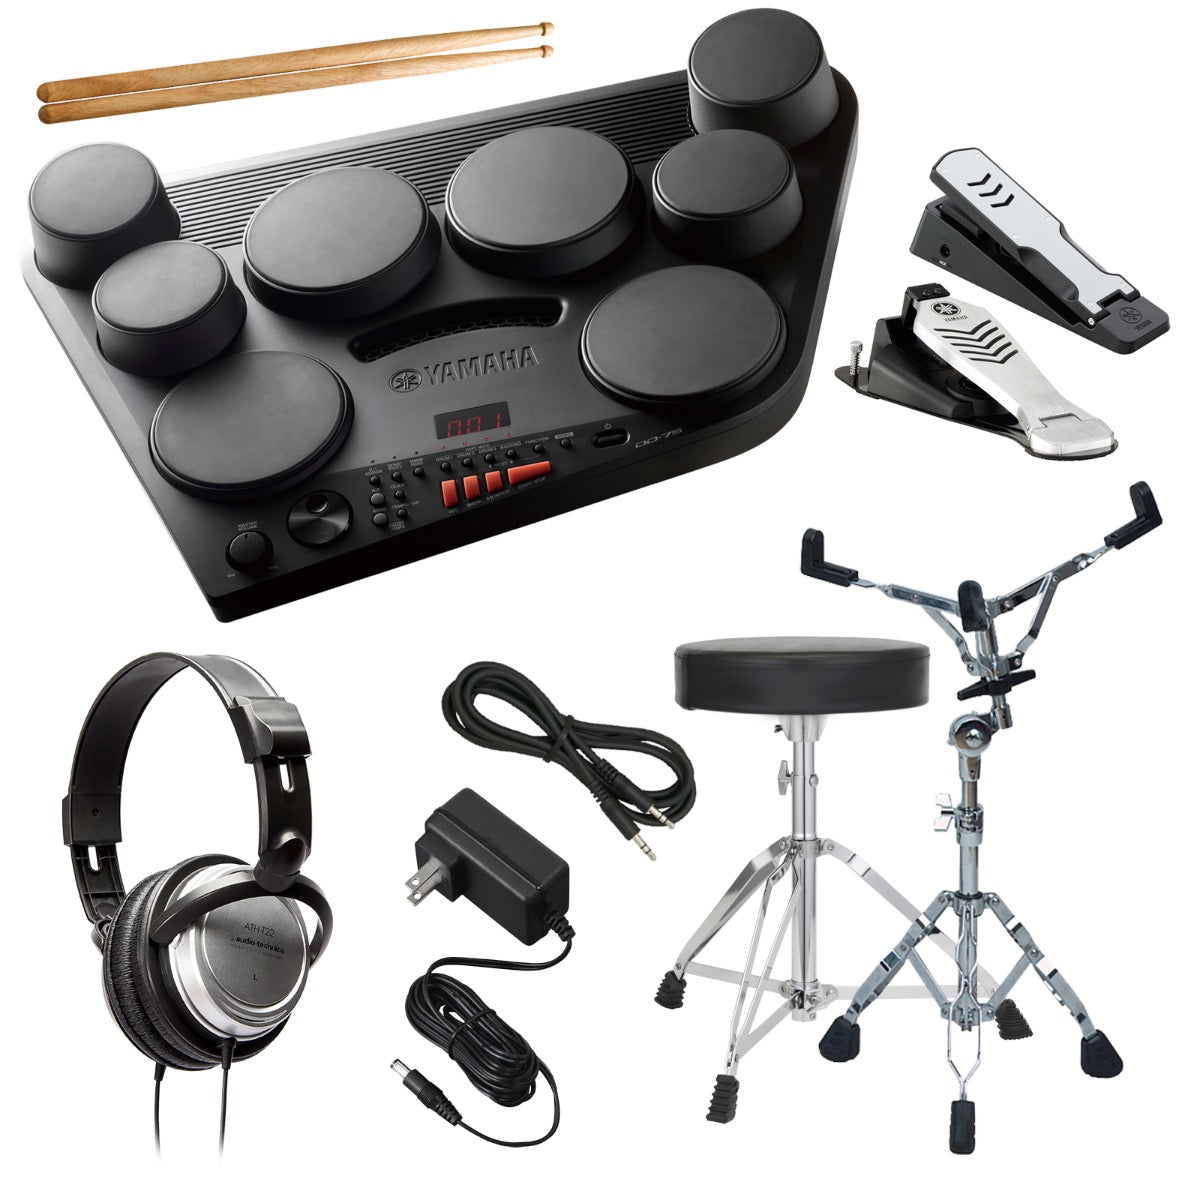 Yamaha DD-75 Digital Drum Kit with Power Adapter COMPLETE DRUM BUNDLE